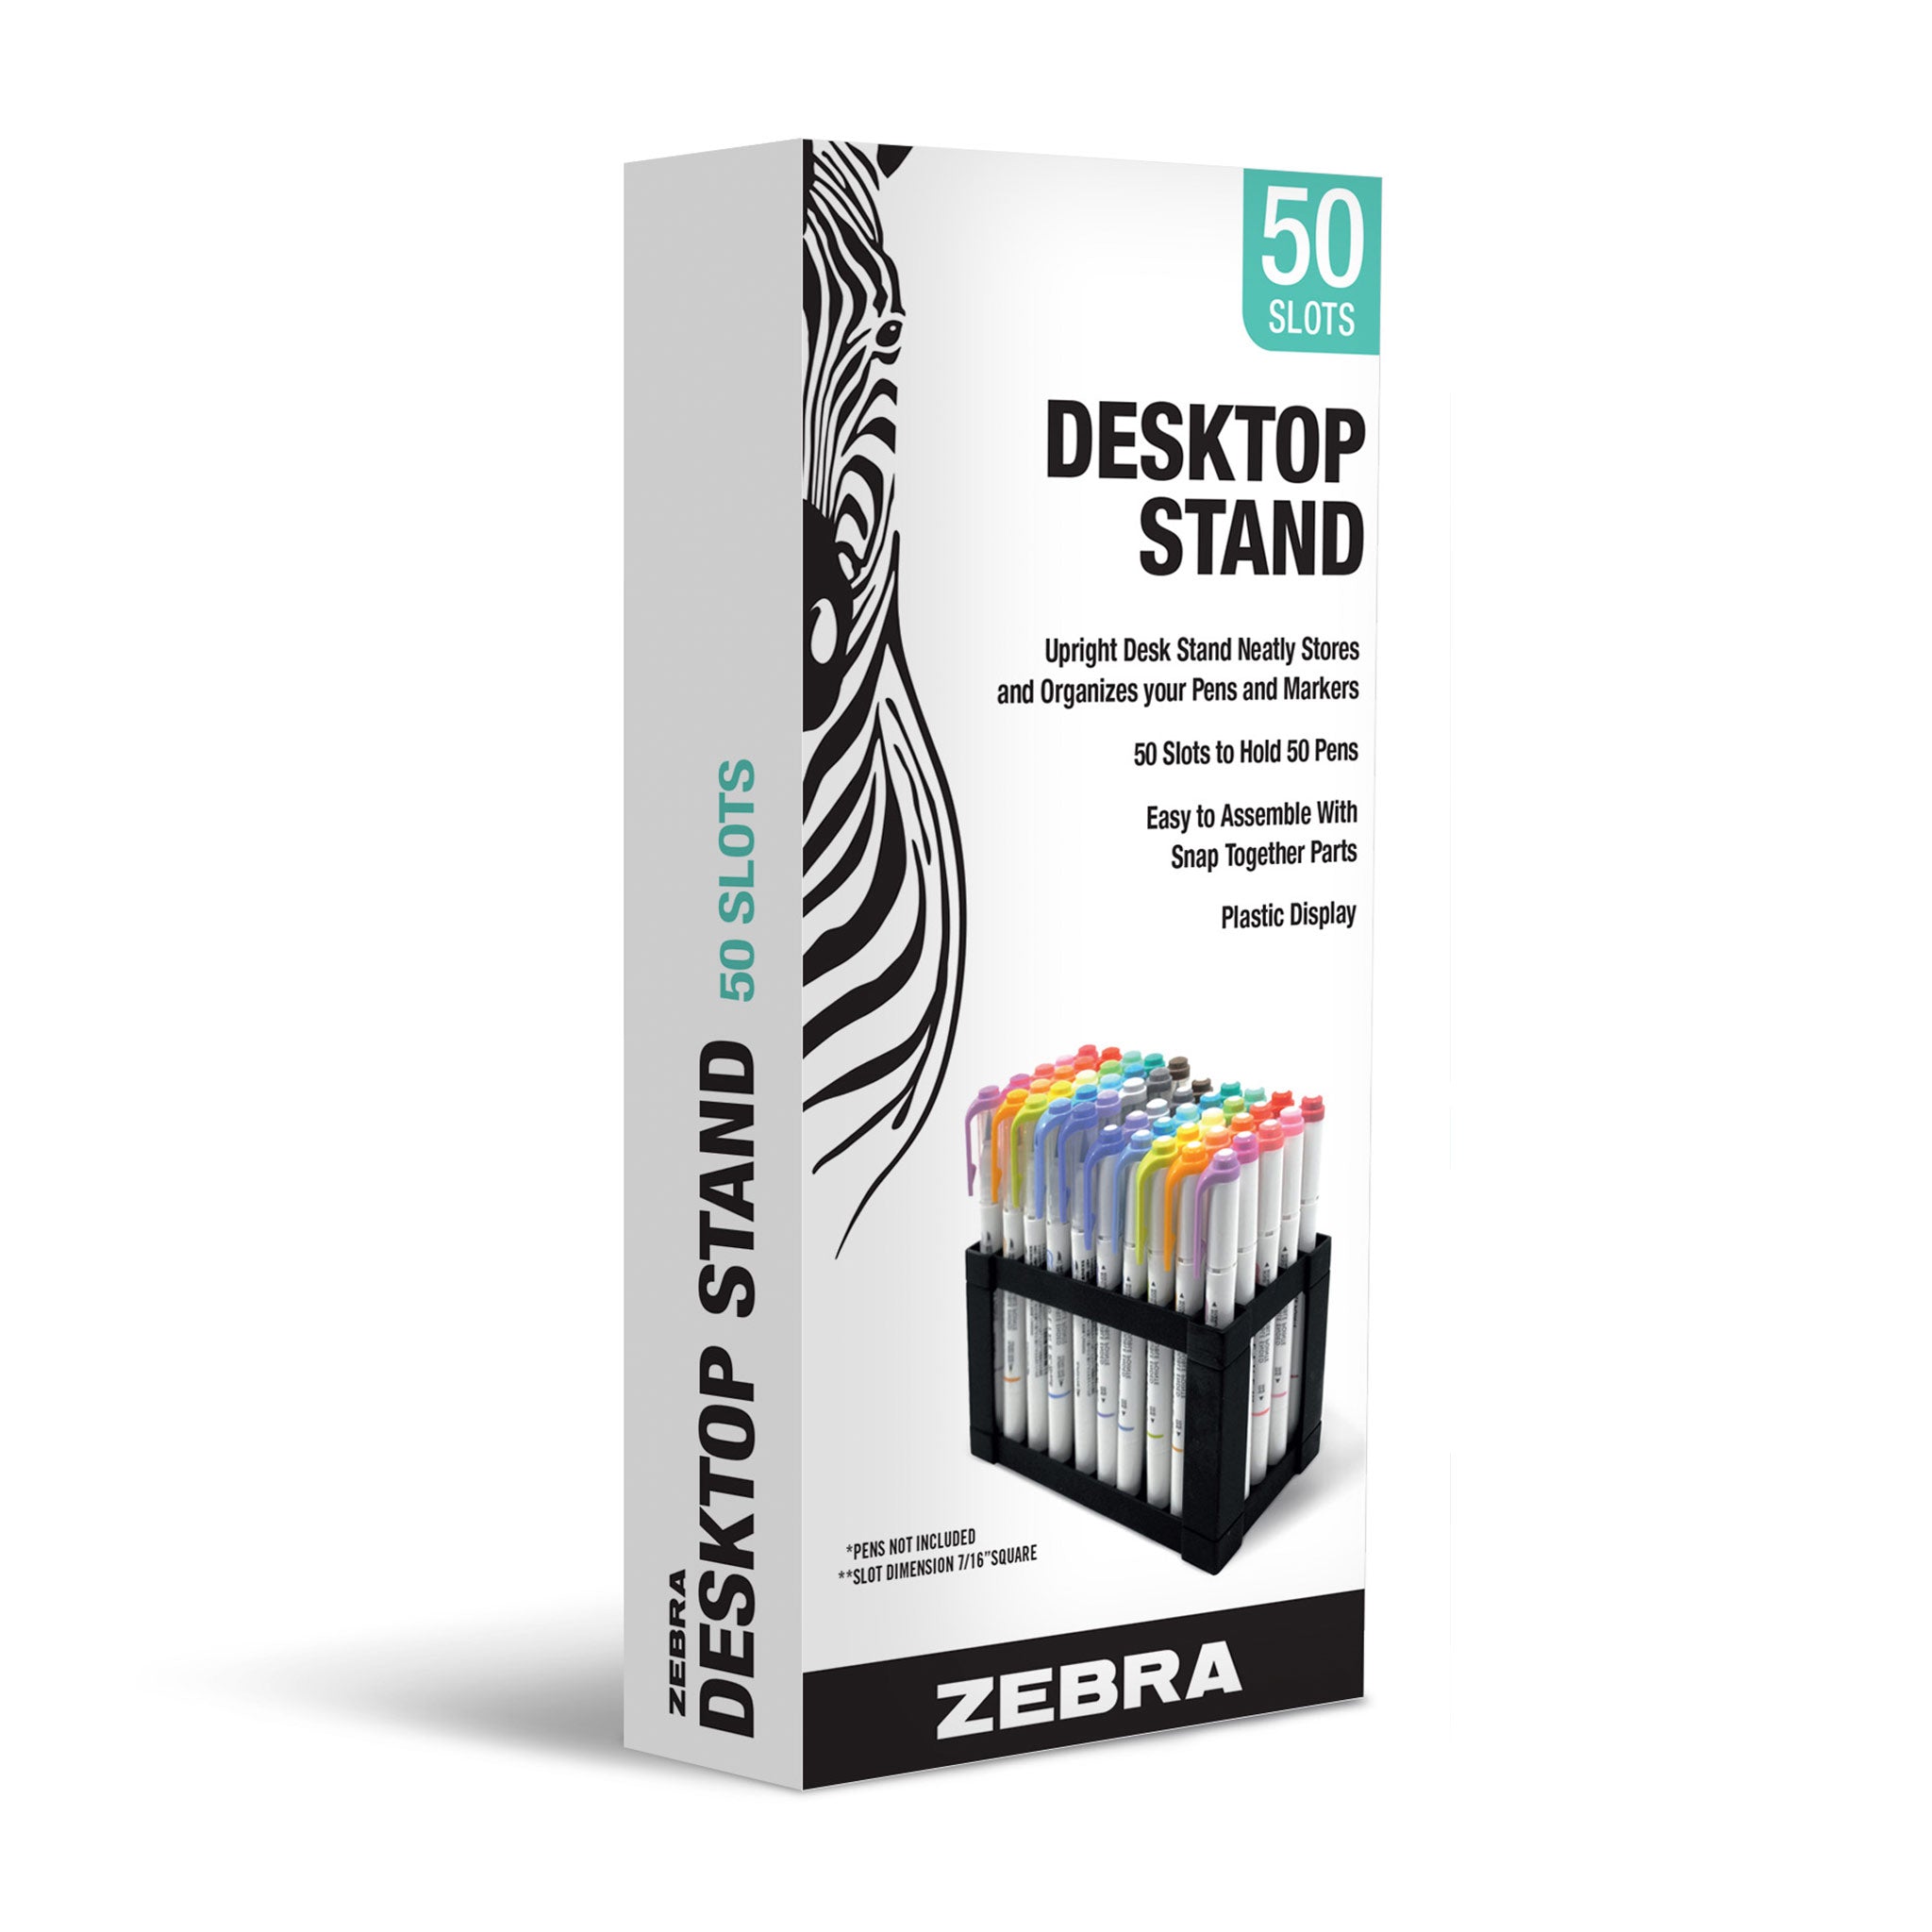 Desktop Stand with 50 Pen/Marker Slots